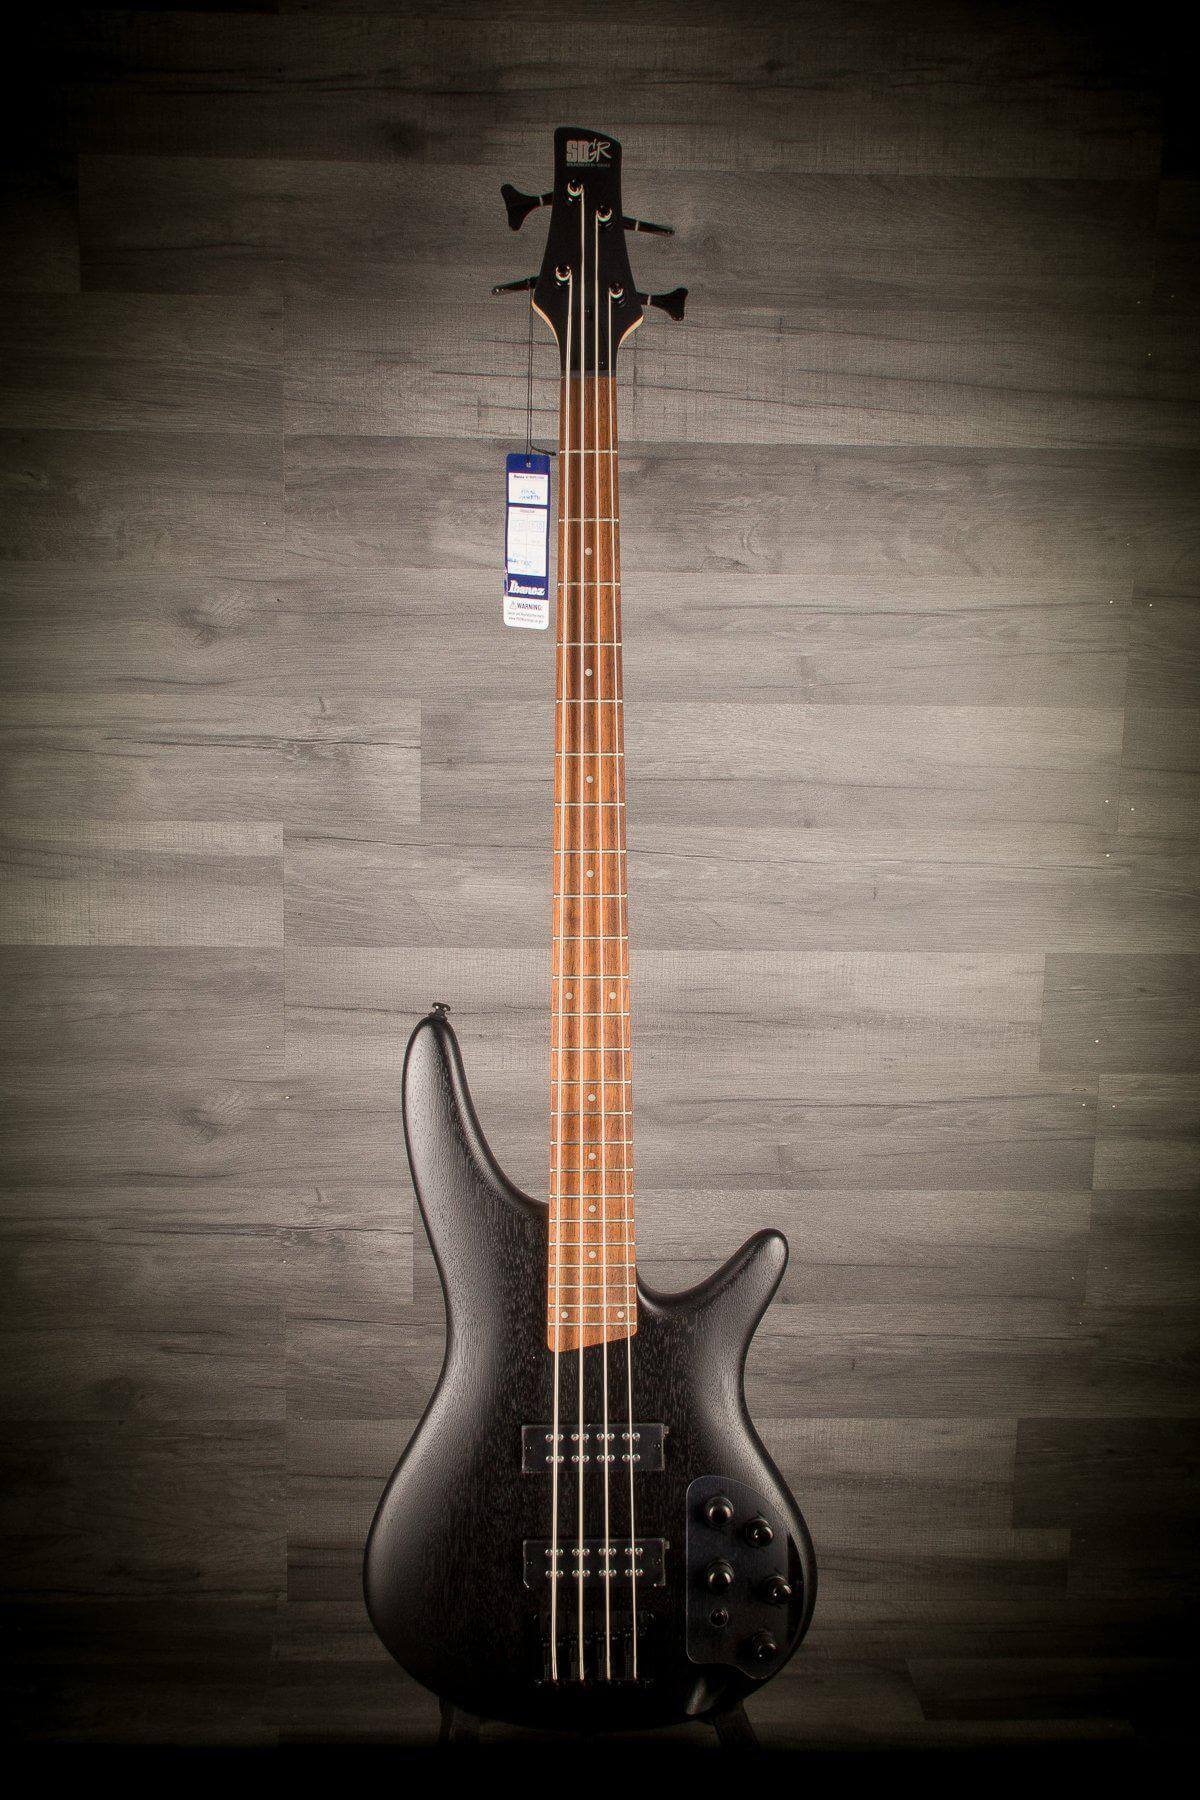 Ibanez Bass Guitar Ibanez SR300EB-WK Bass Guitar - Weathered Black